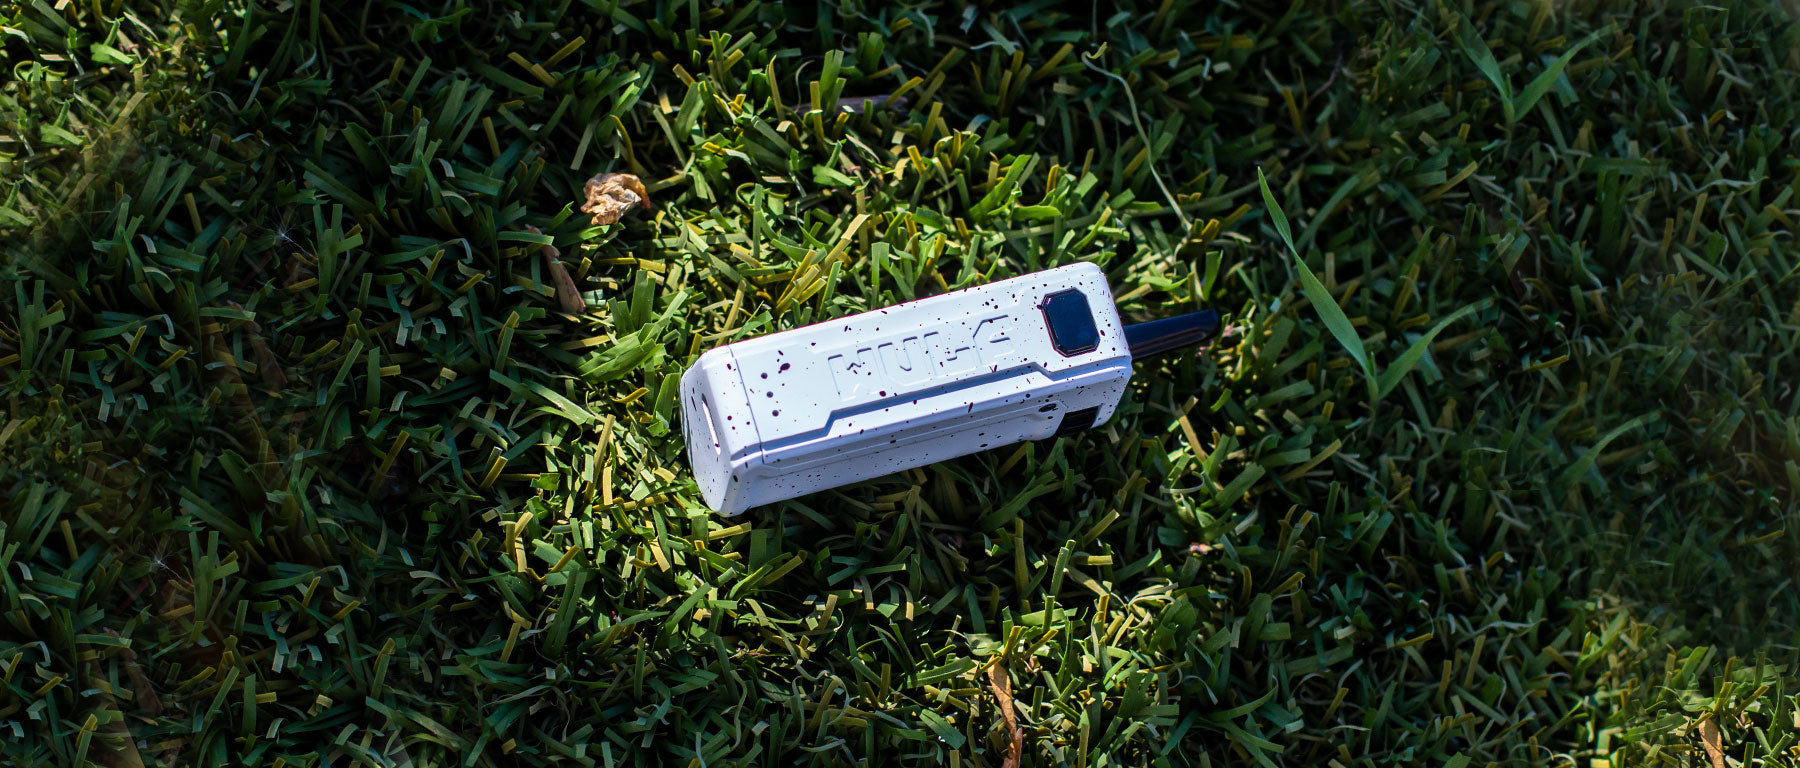 Wulf Mods UNI S oil Cartridge Vaporizer laying down outside on grass 